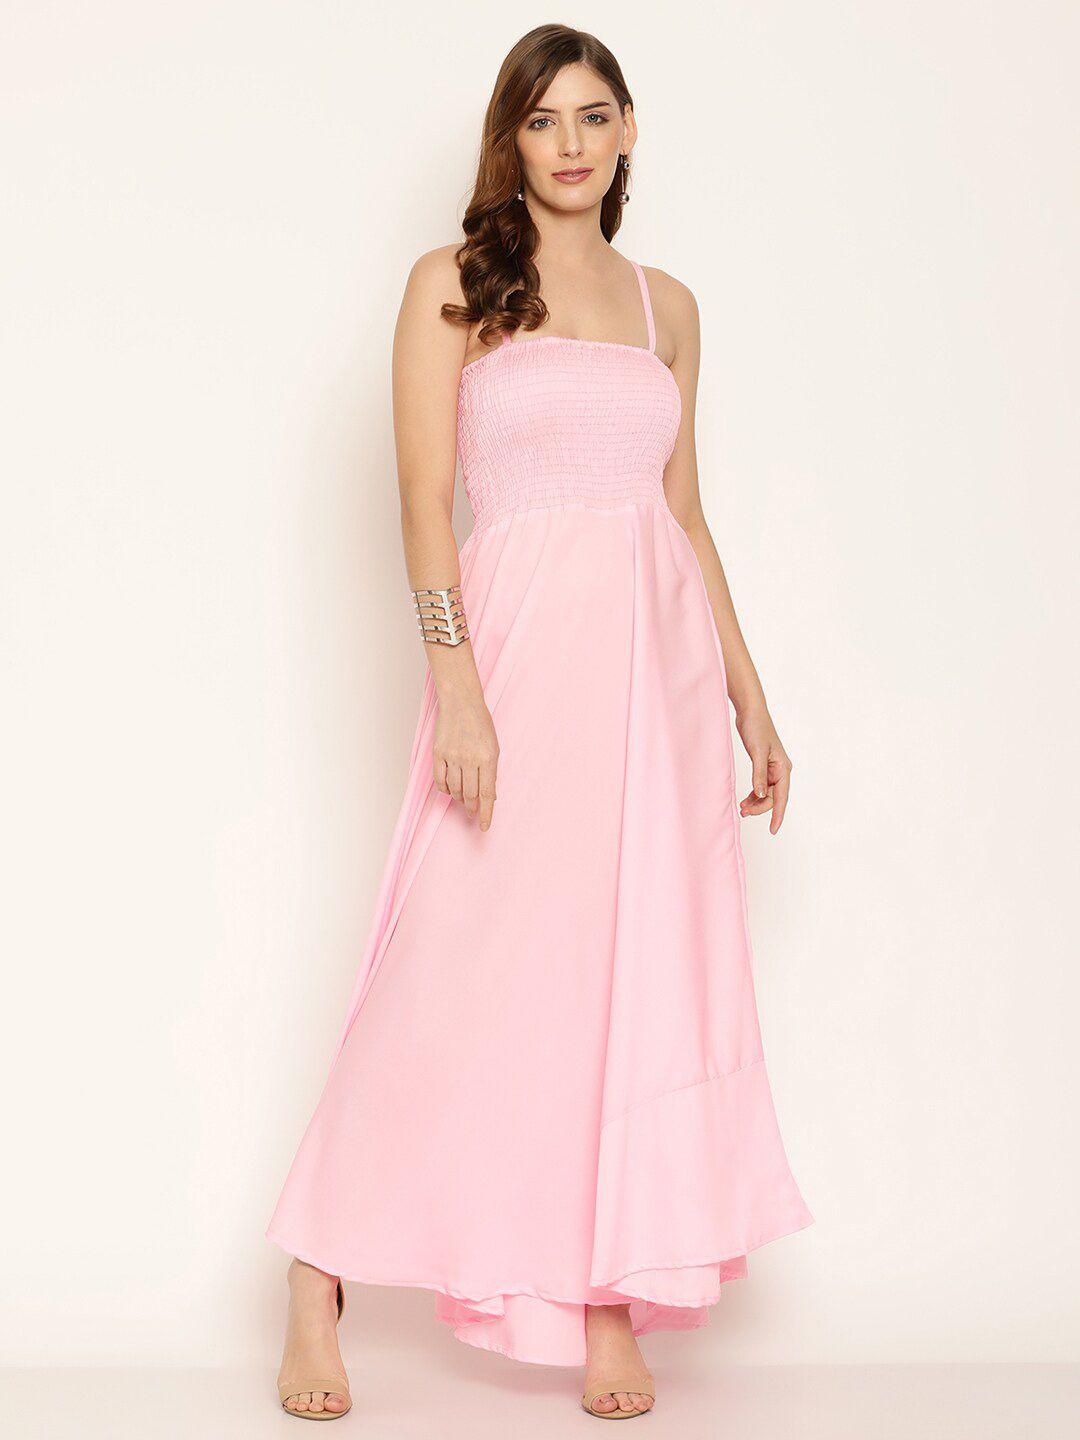 baesd-pink-dress